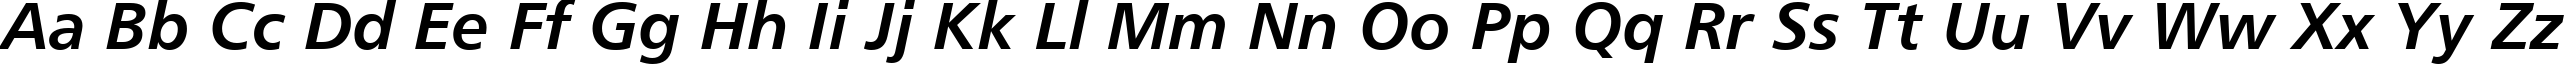 Пример написания английского алфавита шрифтом Humanist 777 Bold Italic BT